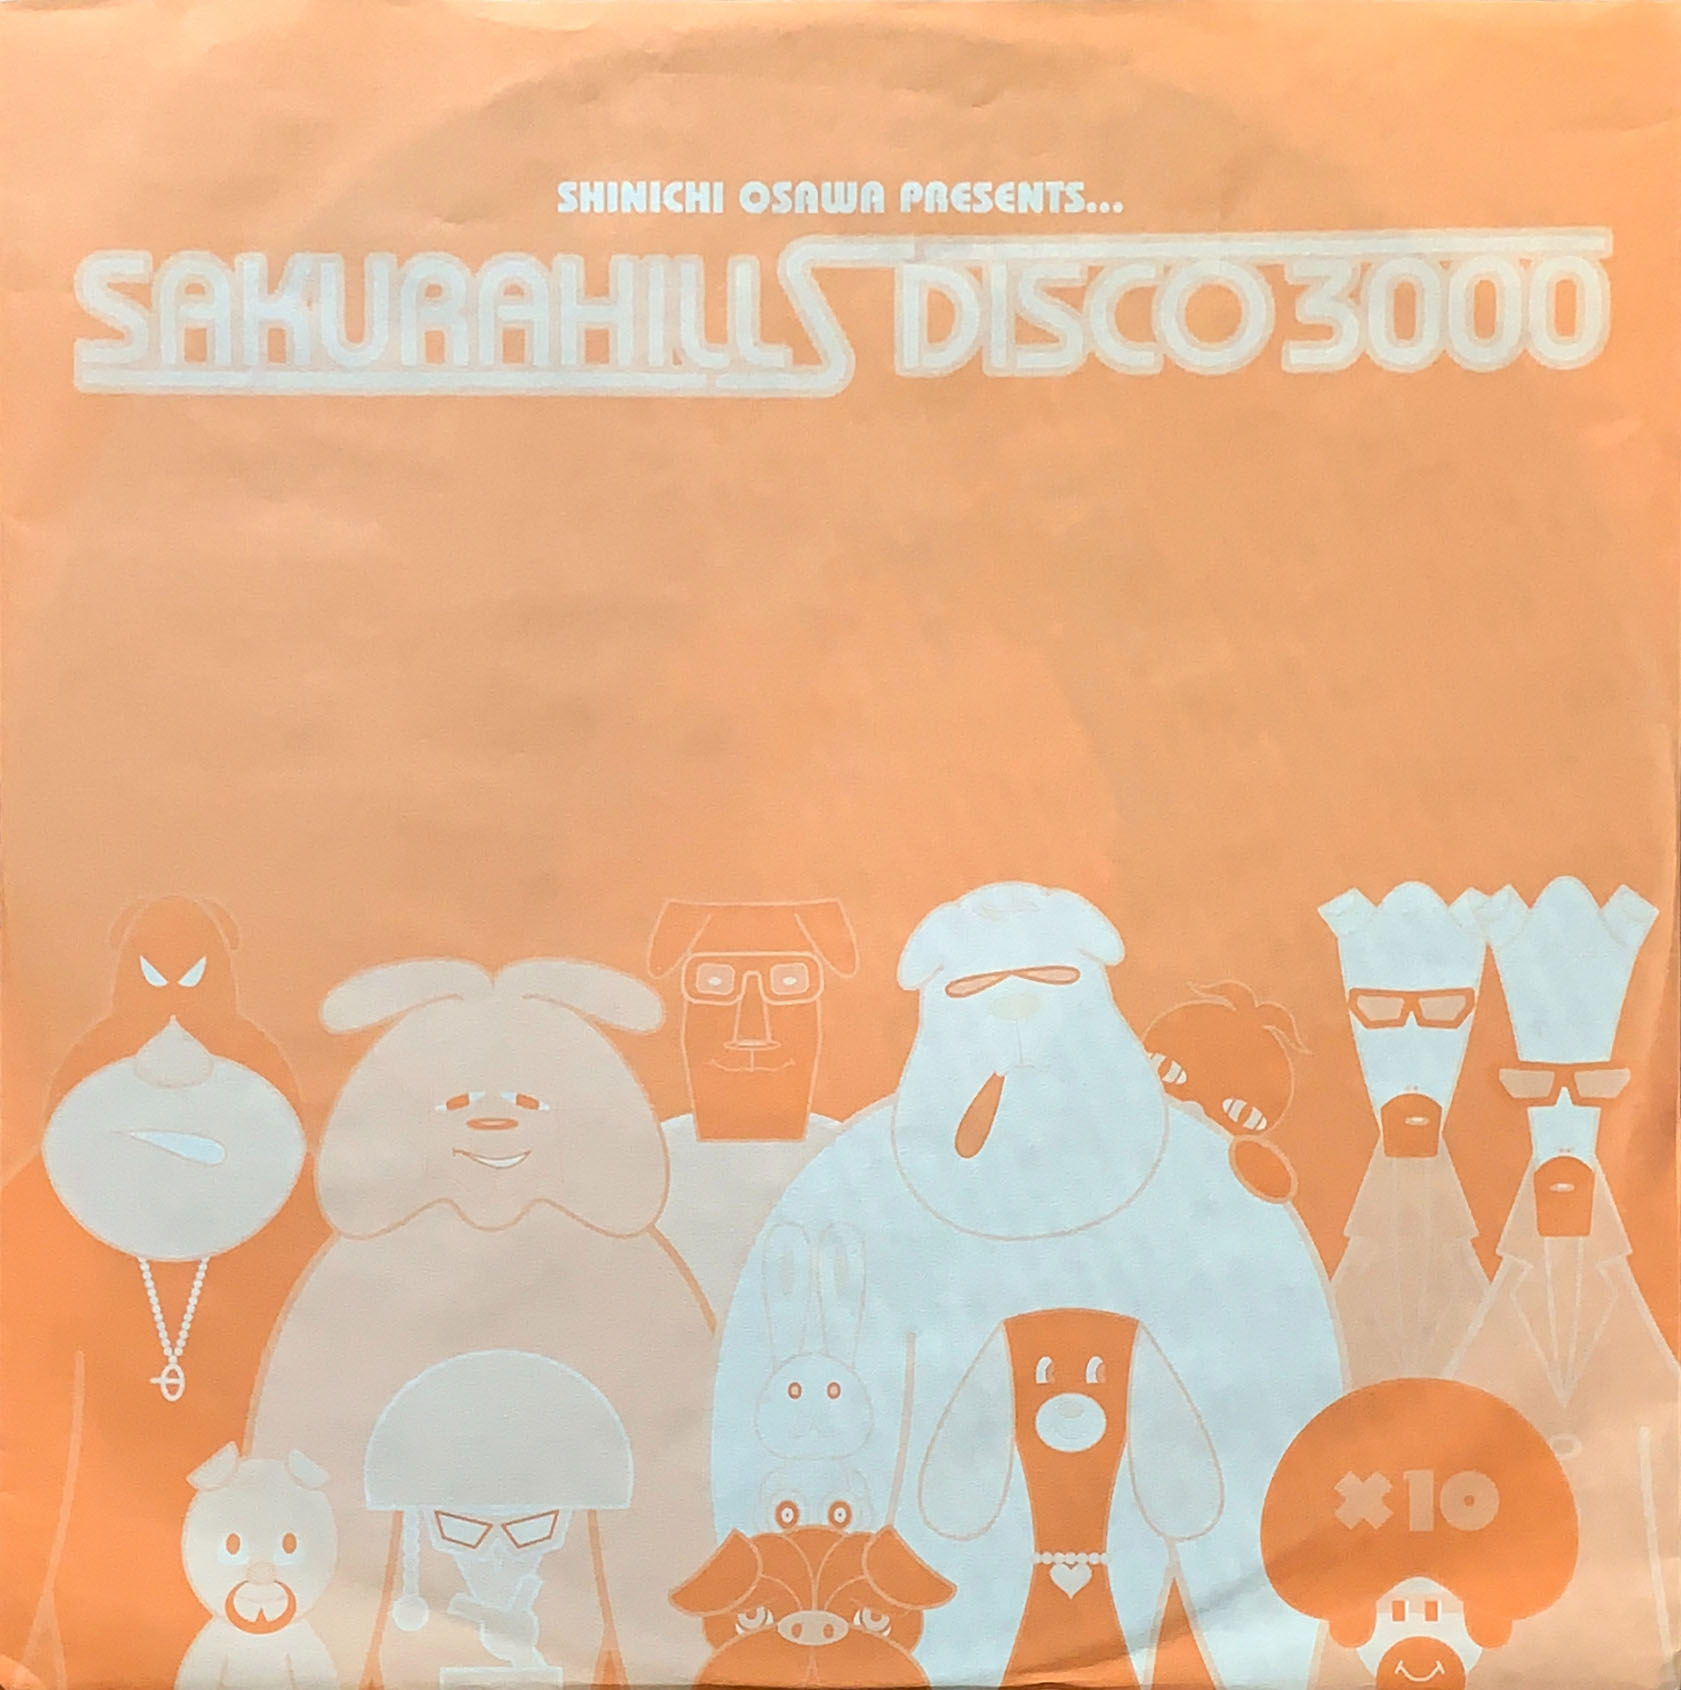 SAKURA HILLS DISCO 3000 [3LP] - 大沢伸一 - bar chiba Music Store